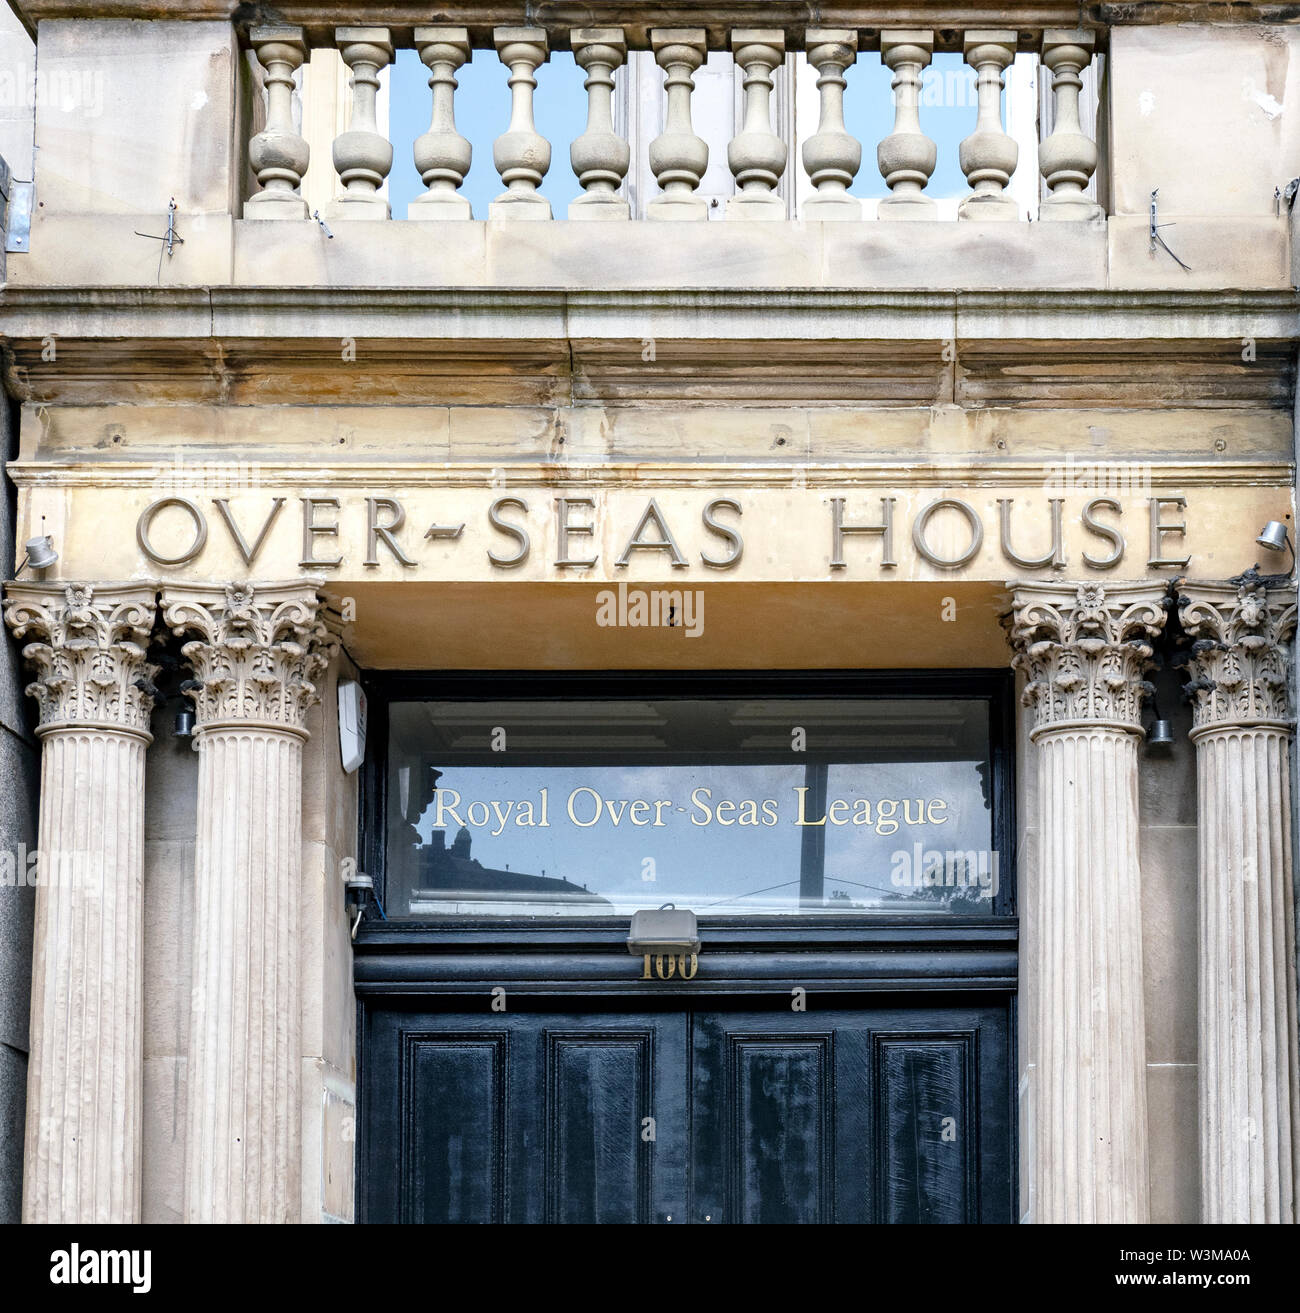 The Royal Over-Seas League building in Princes Street, Edinburgh, now closed. Stock Photo